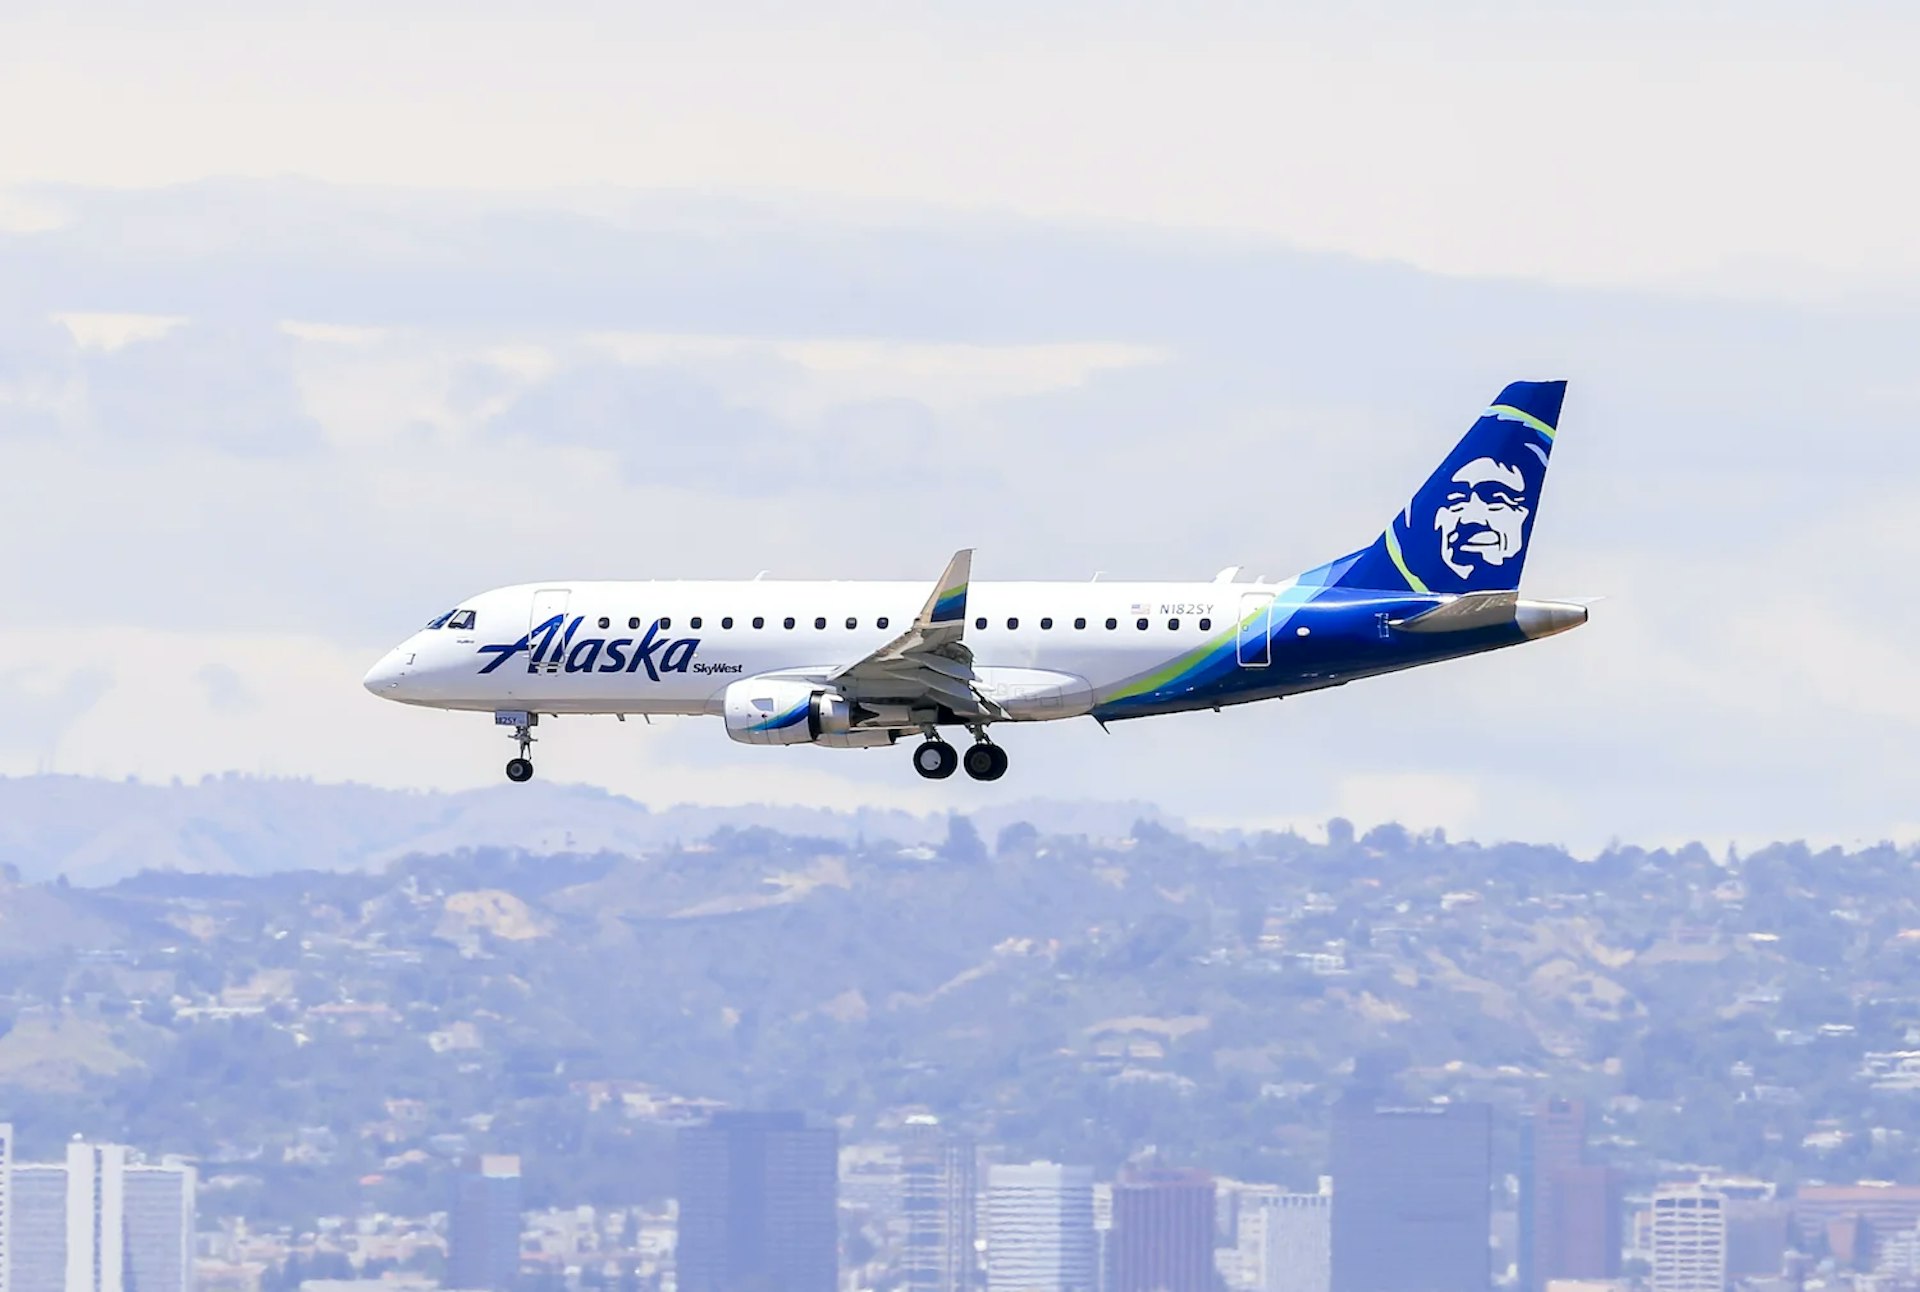 Alaska Airlines plane landing at LAX